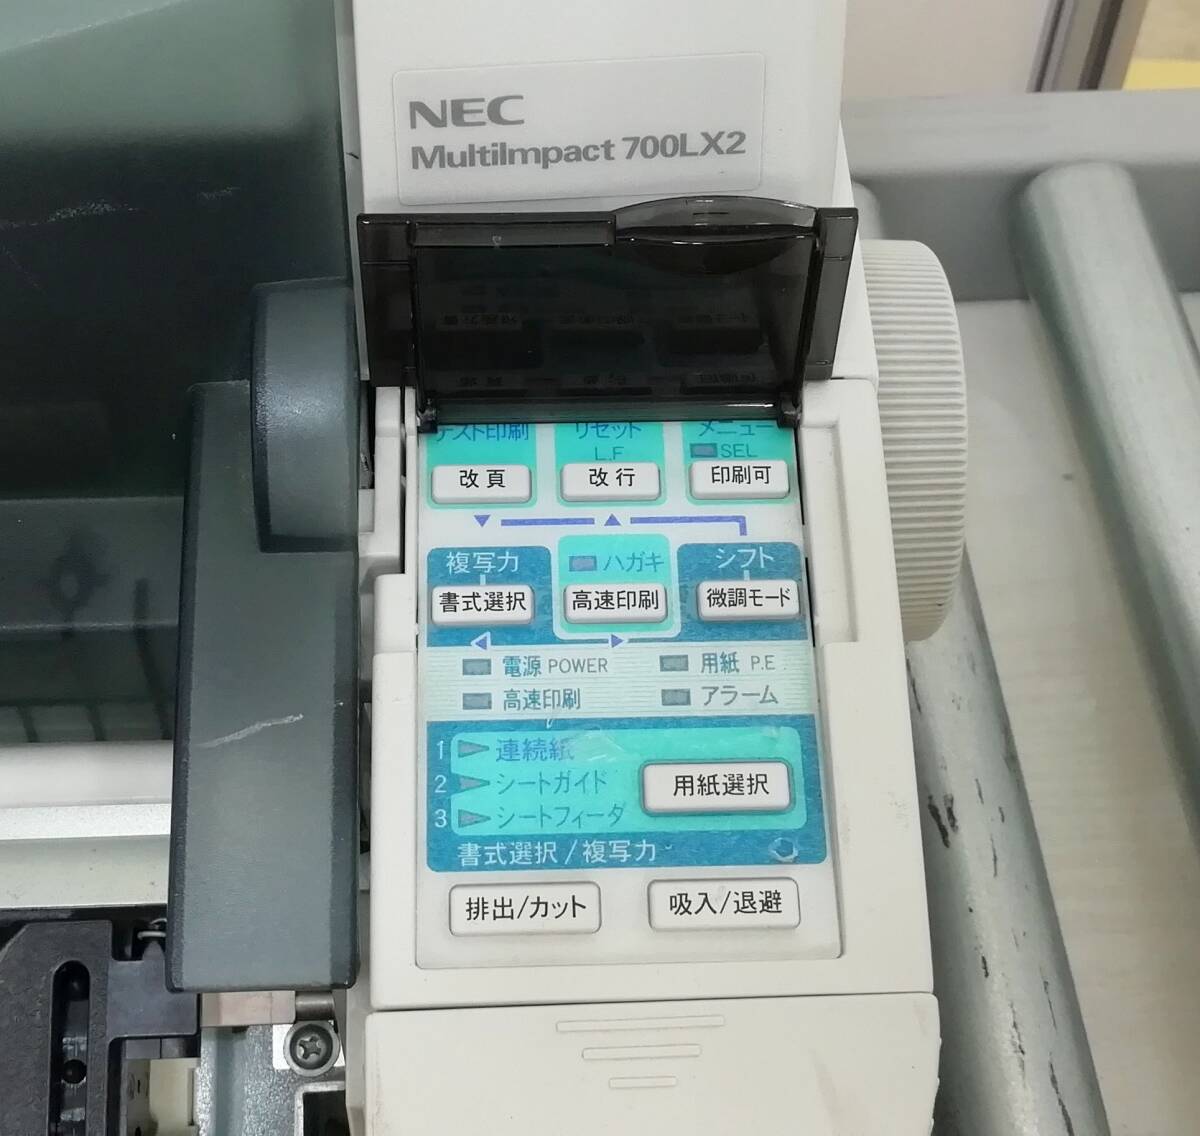 NEC MultiImpact 700LX2 PR-D700LX2 ドットインパクト プリンター 水平型 中古インクリボン付 即日発送 一週間返品保証【H24051527】_画像4